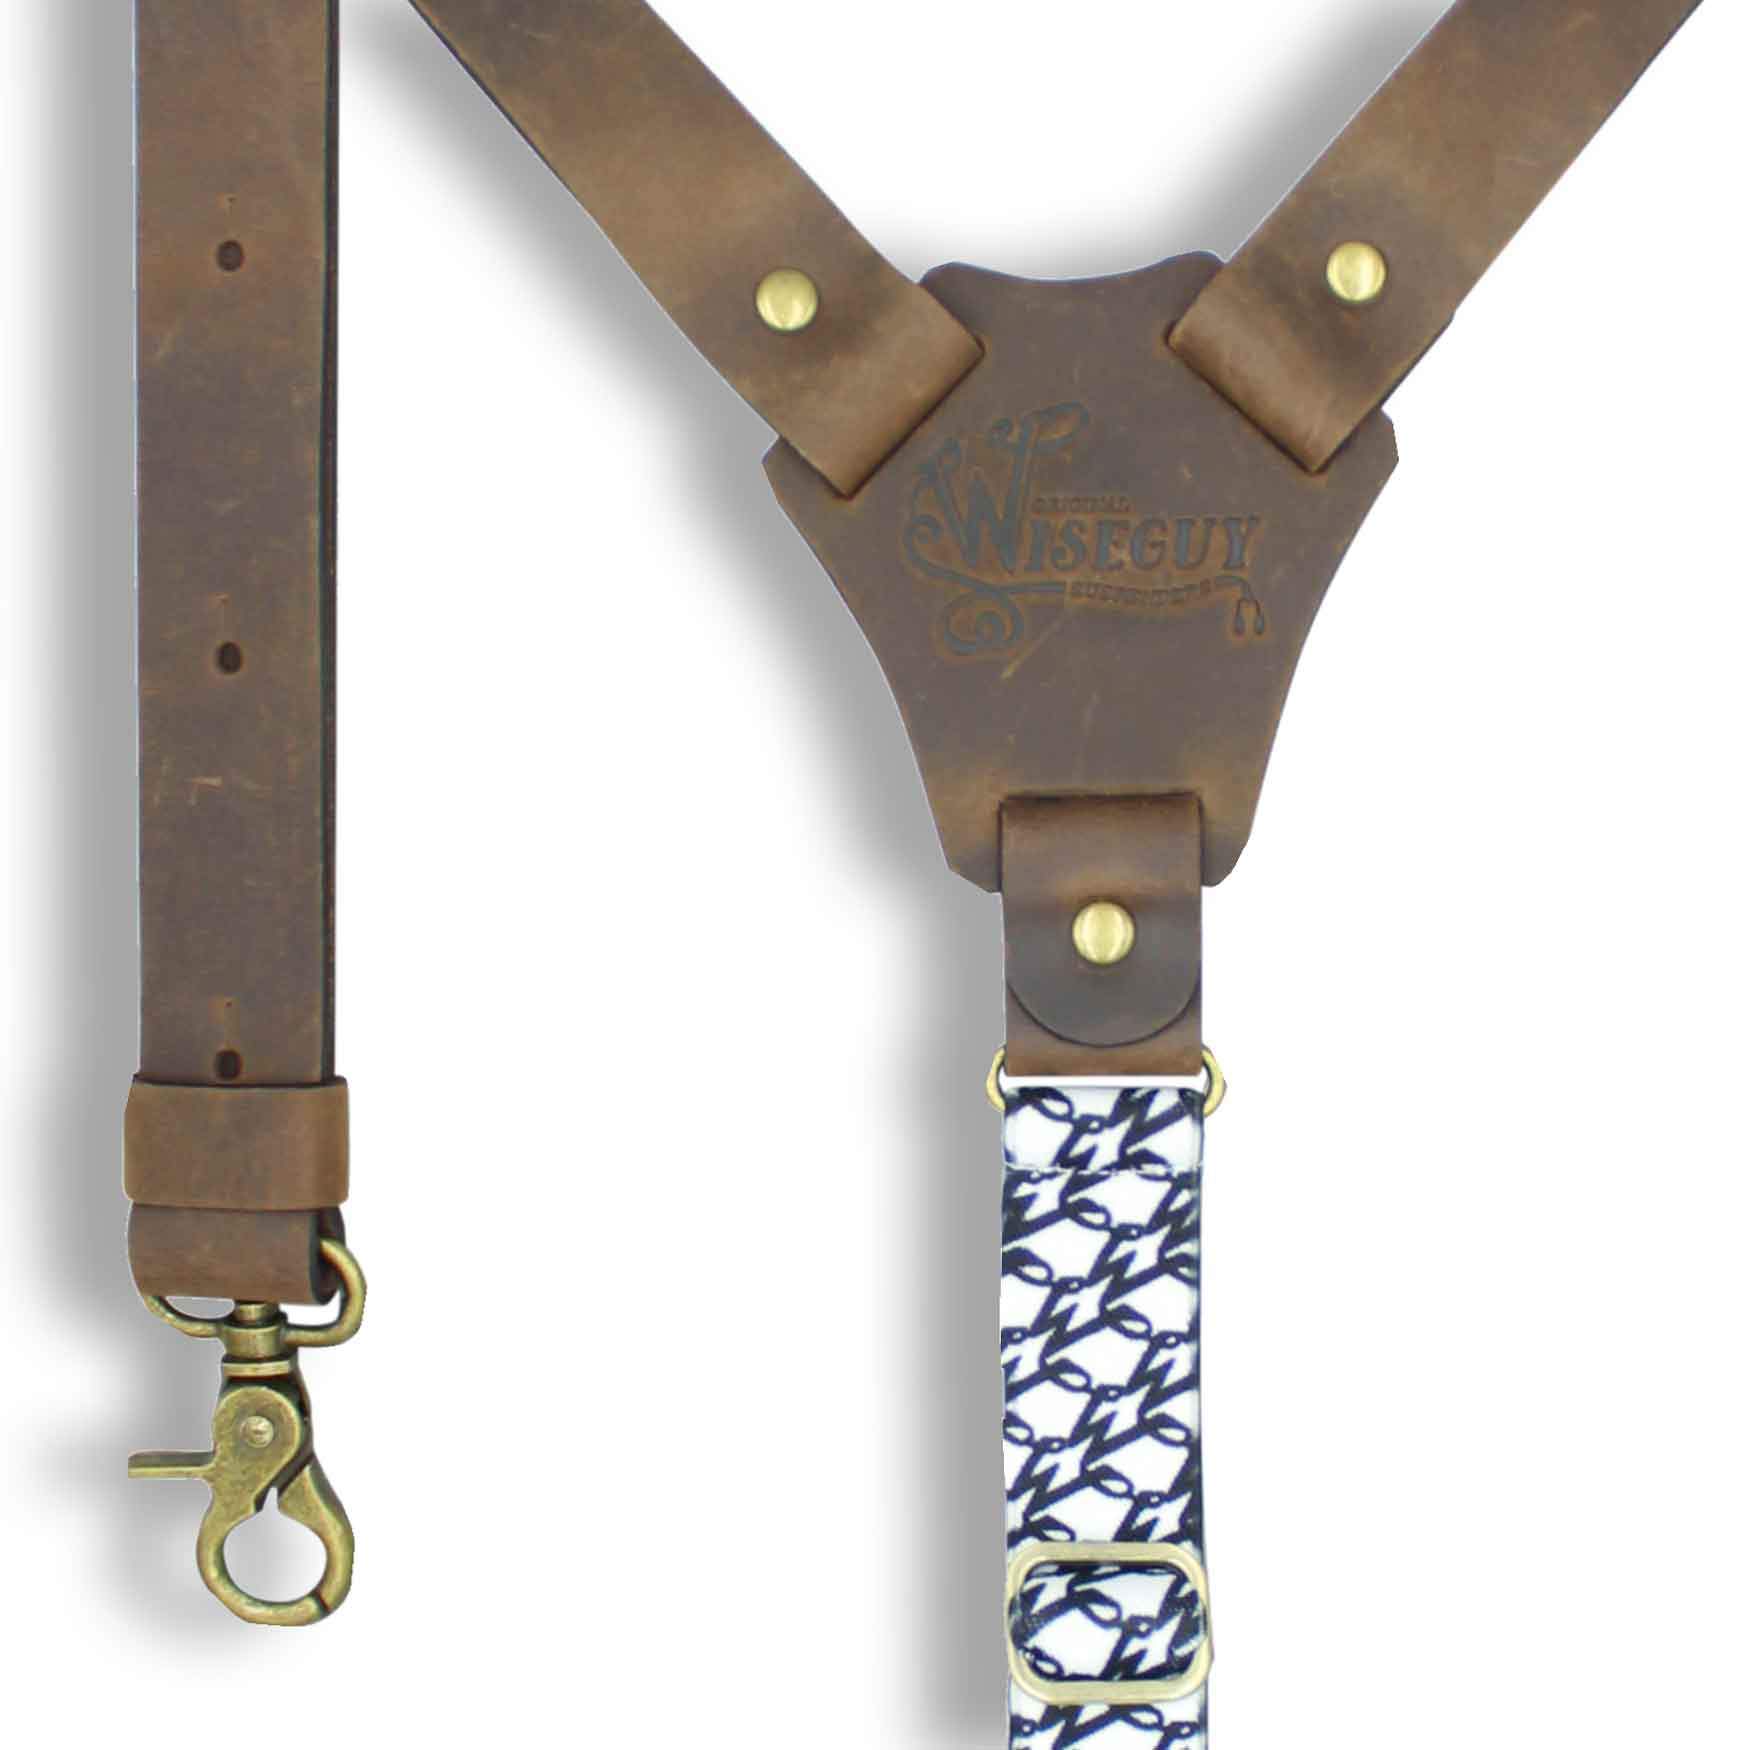 Flex Dark Brown Leather Suspenders with W Monogram Elastic Back Strap - Wiseguy Suspenders